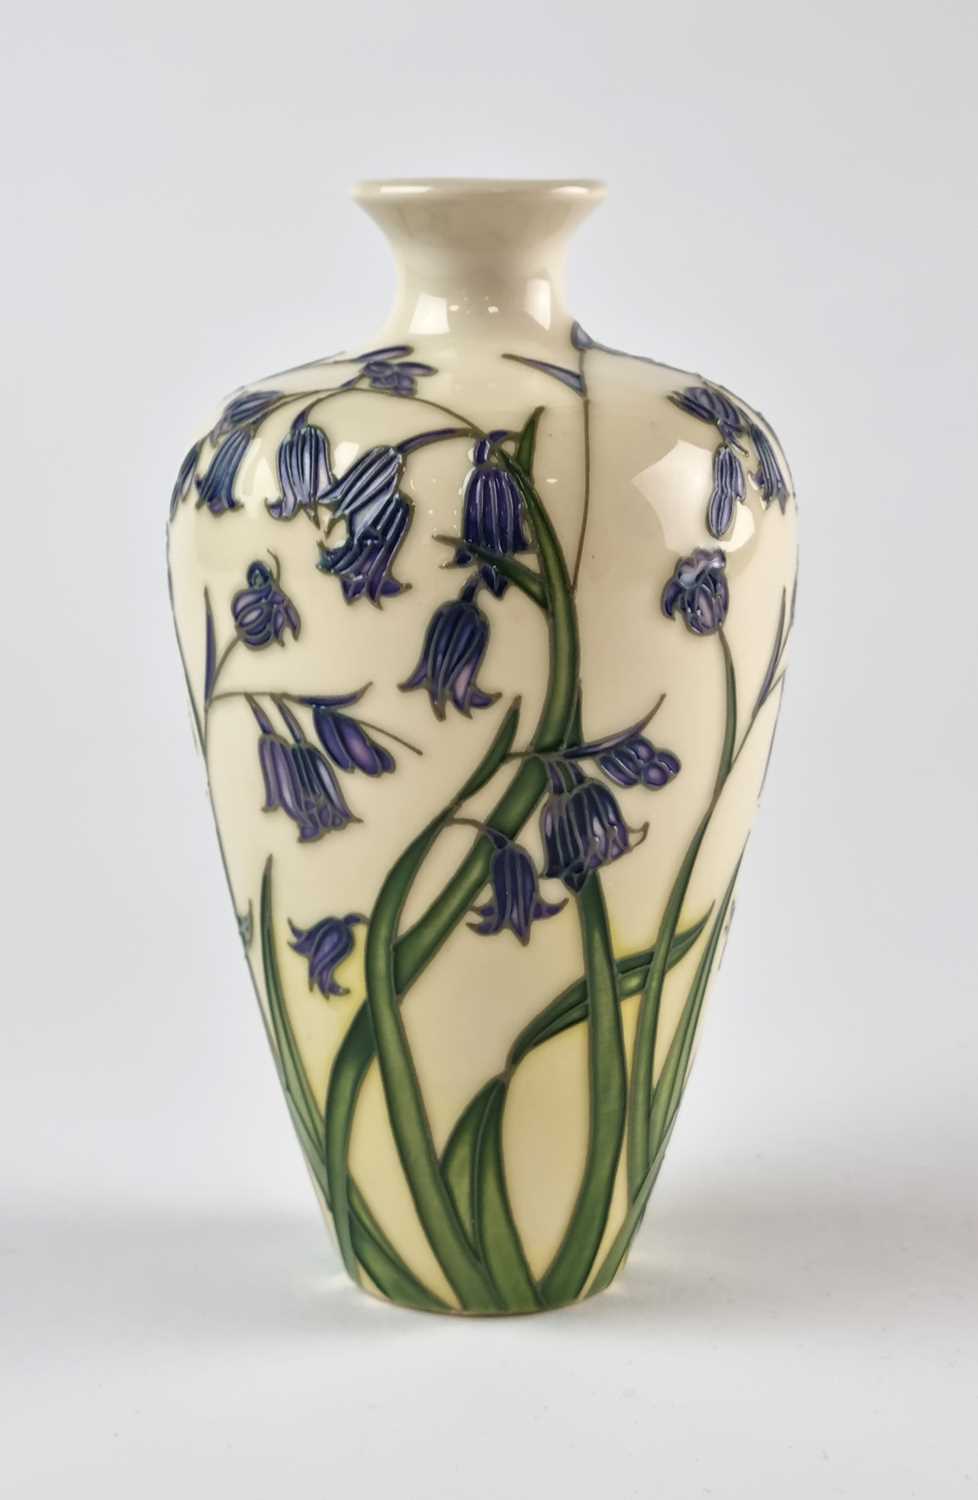 Lot Moorcroft limited edition 'Bluebells' vase